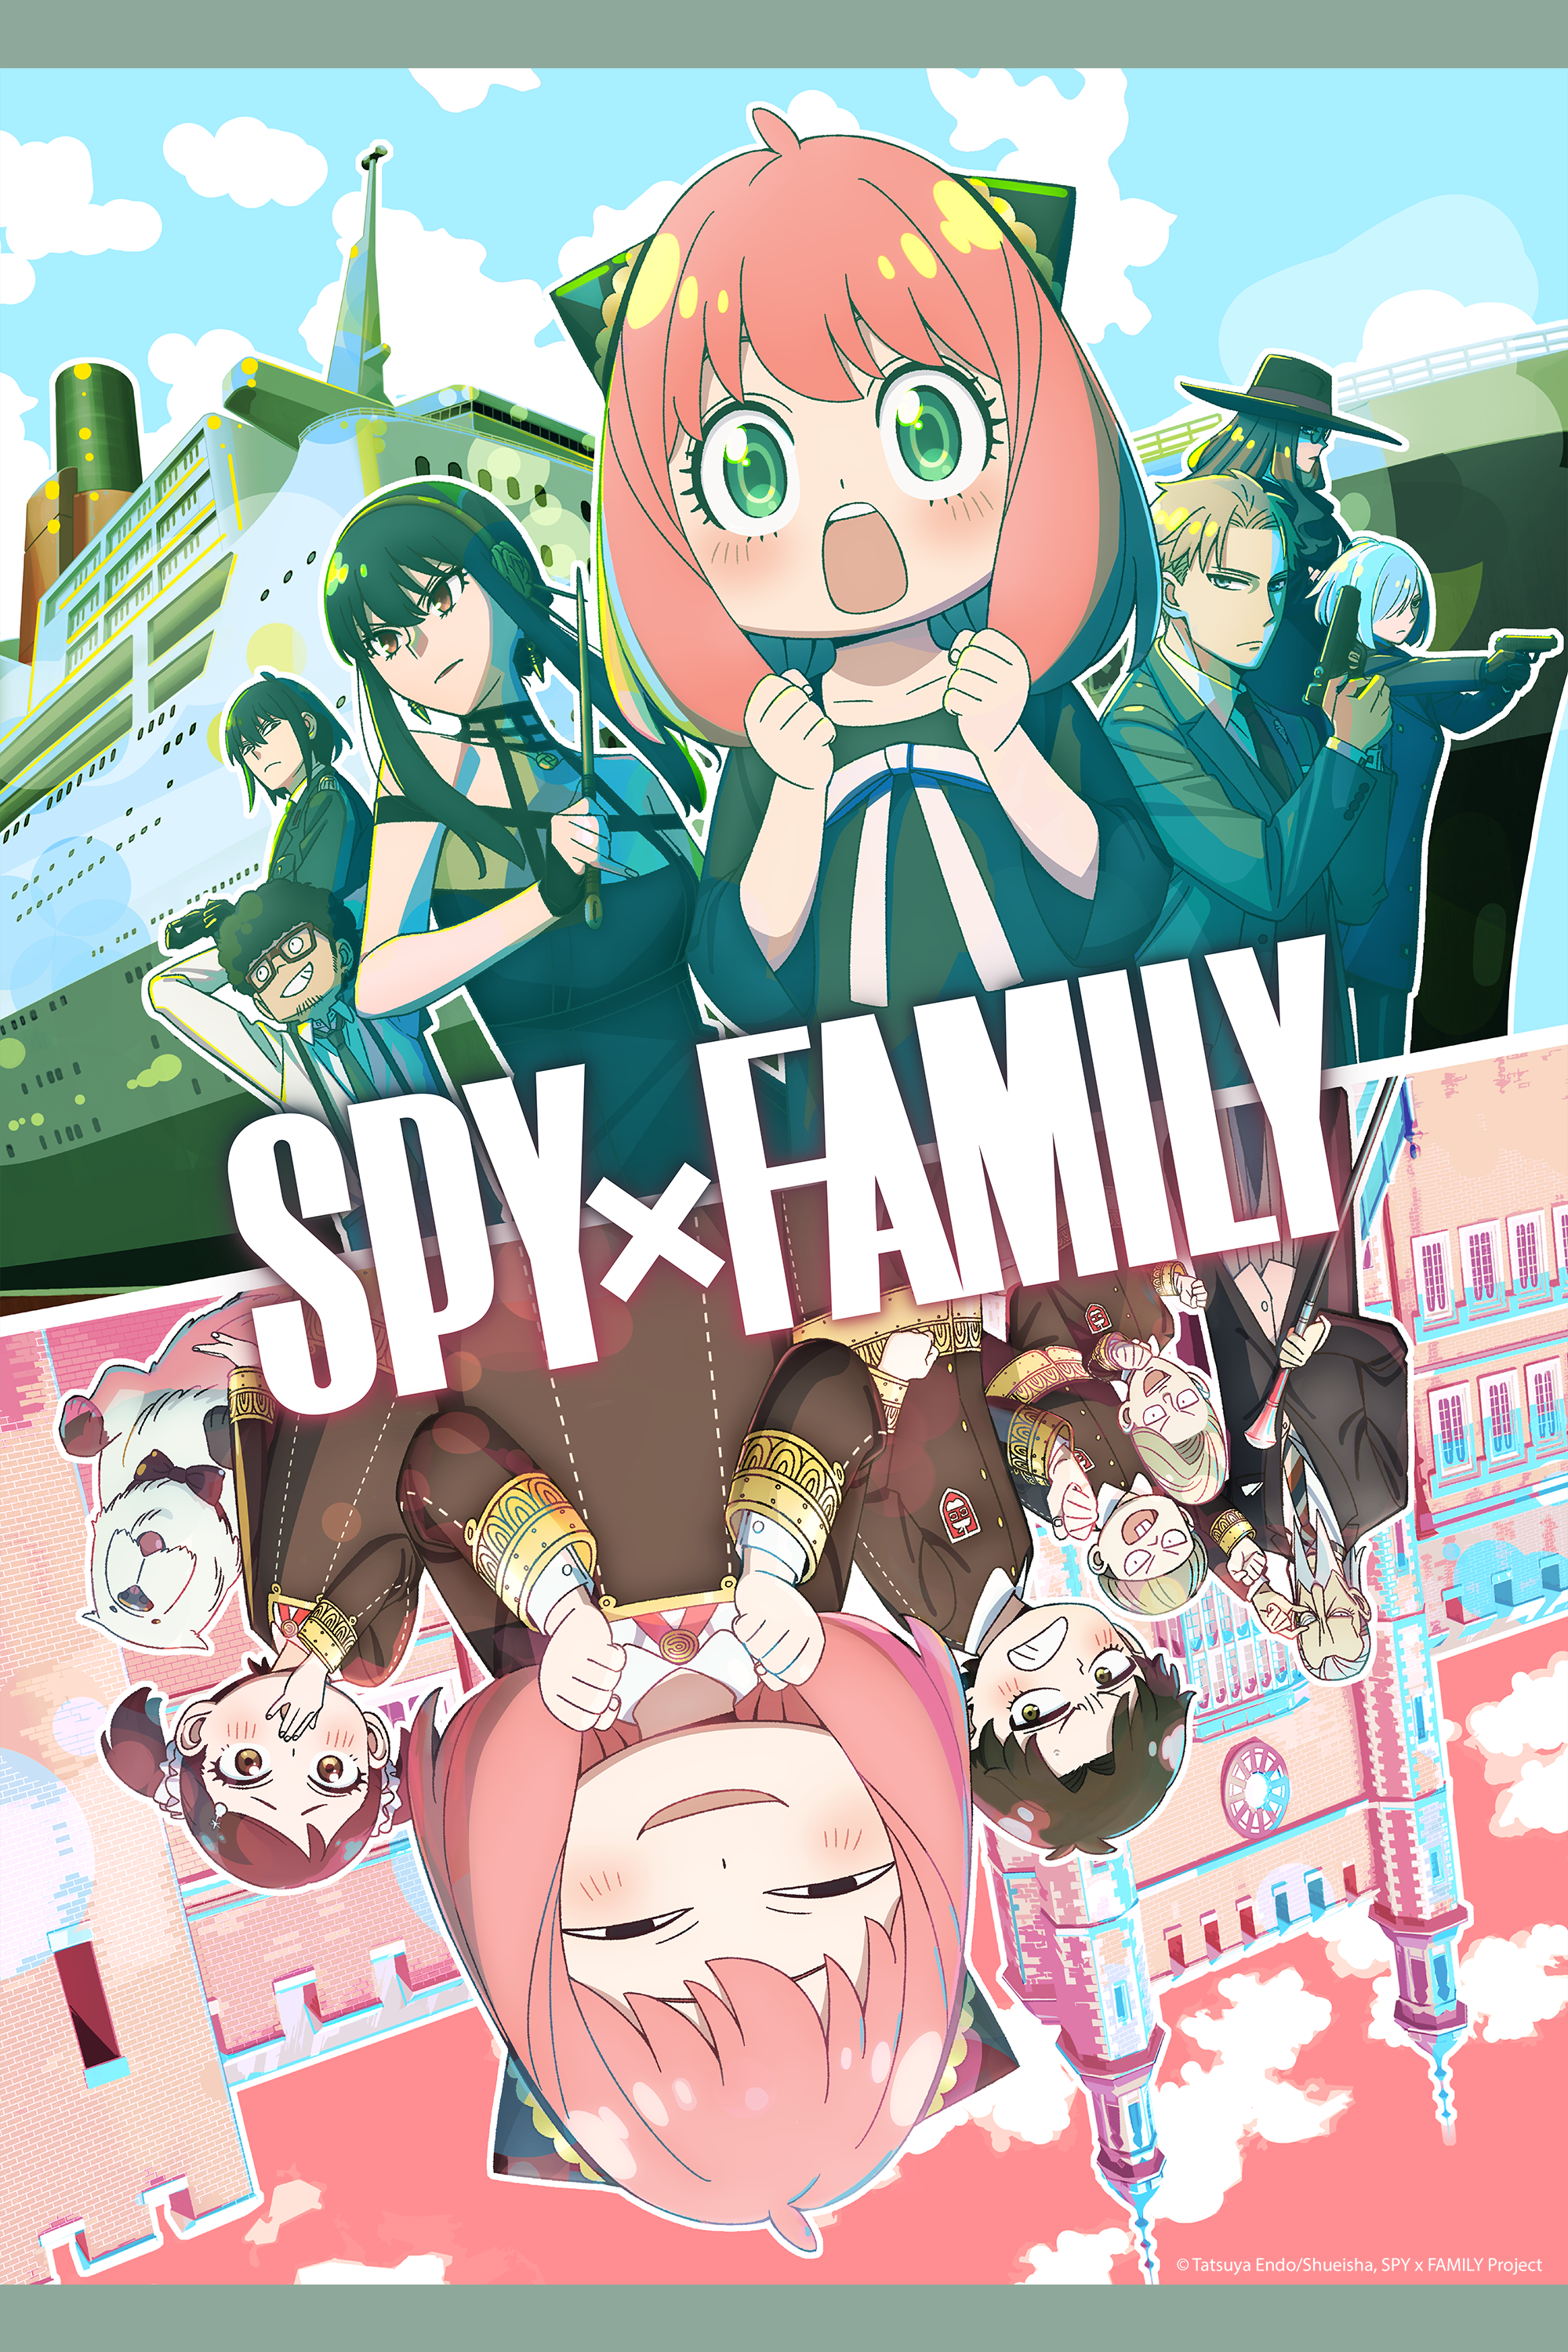 Yor Briar - Spy × Family - Mobile Wallpaper by Shimada Kazuaki